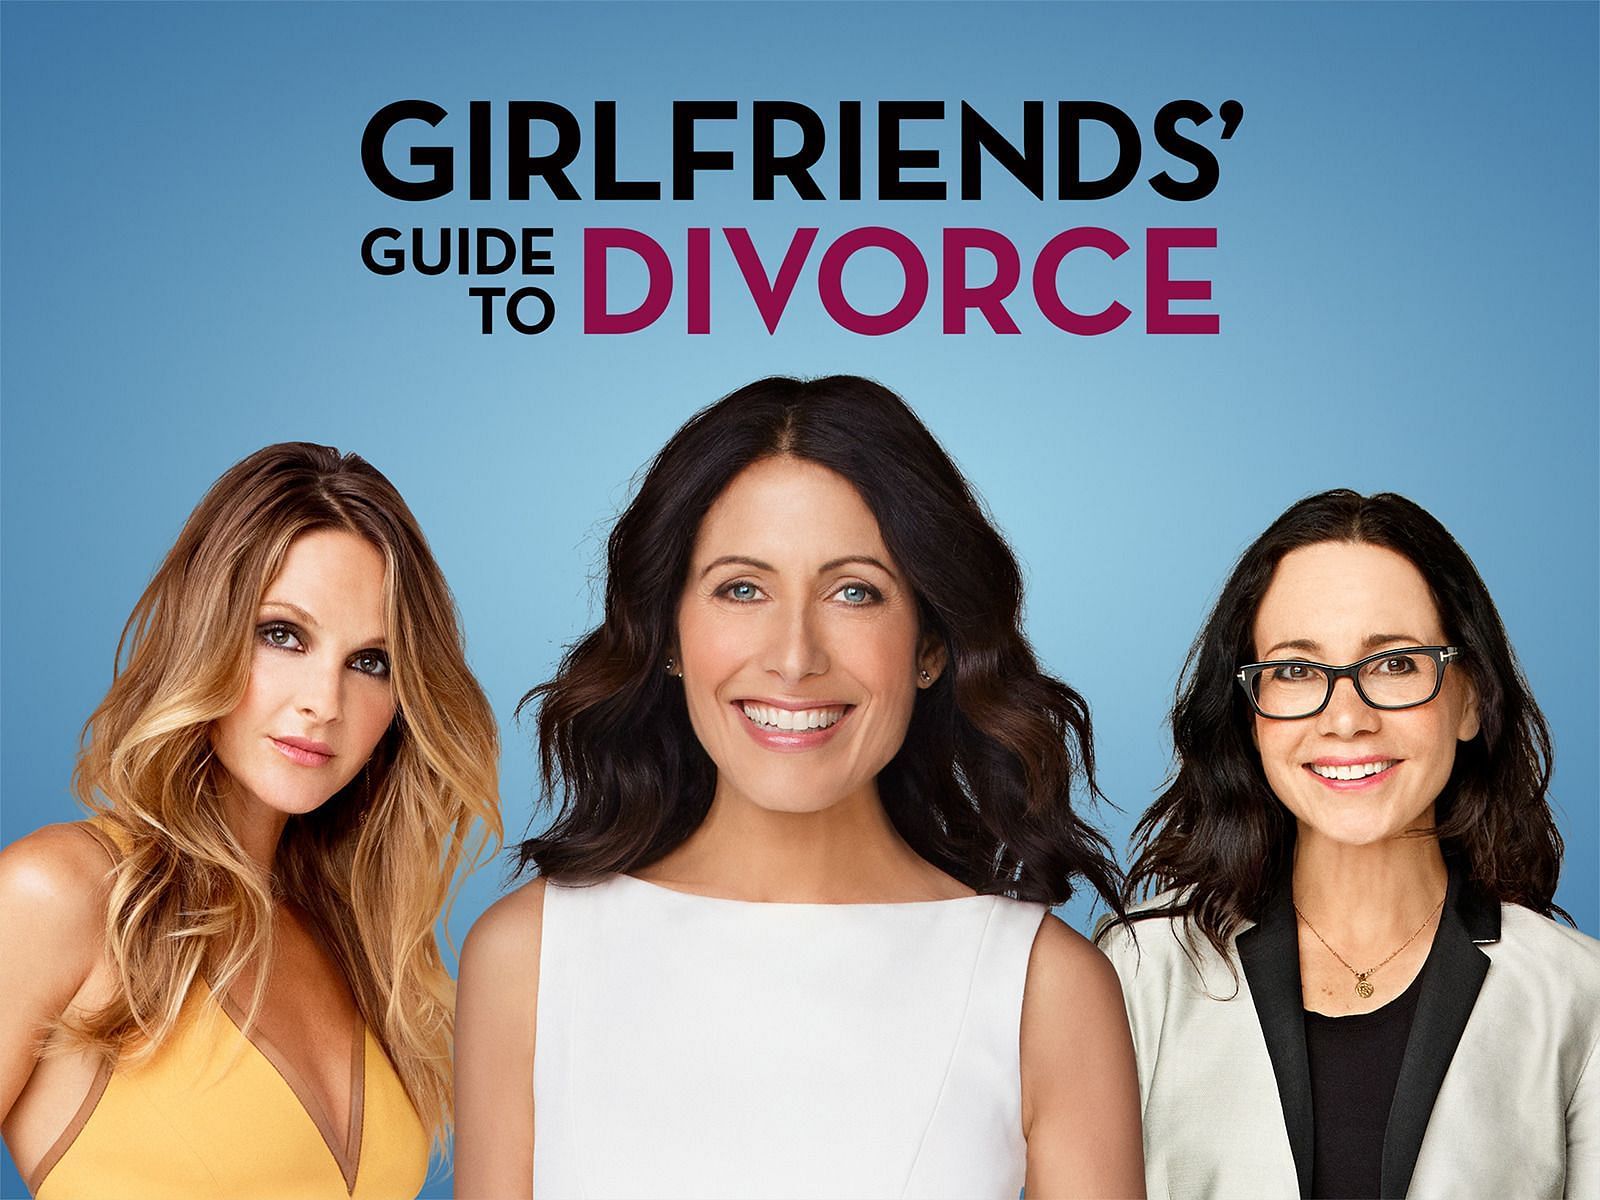 Girlfriends&#039; Guide to Divorce (Image via Bravo)